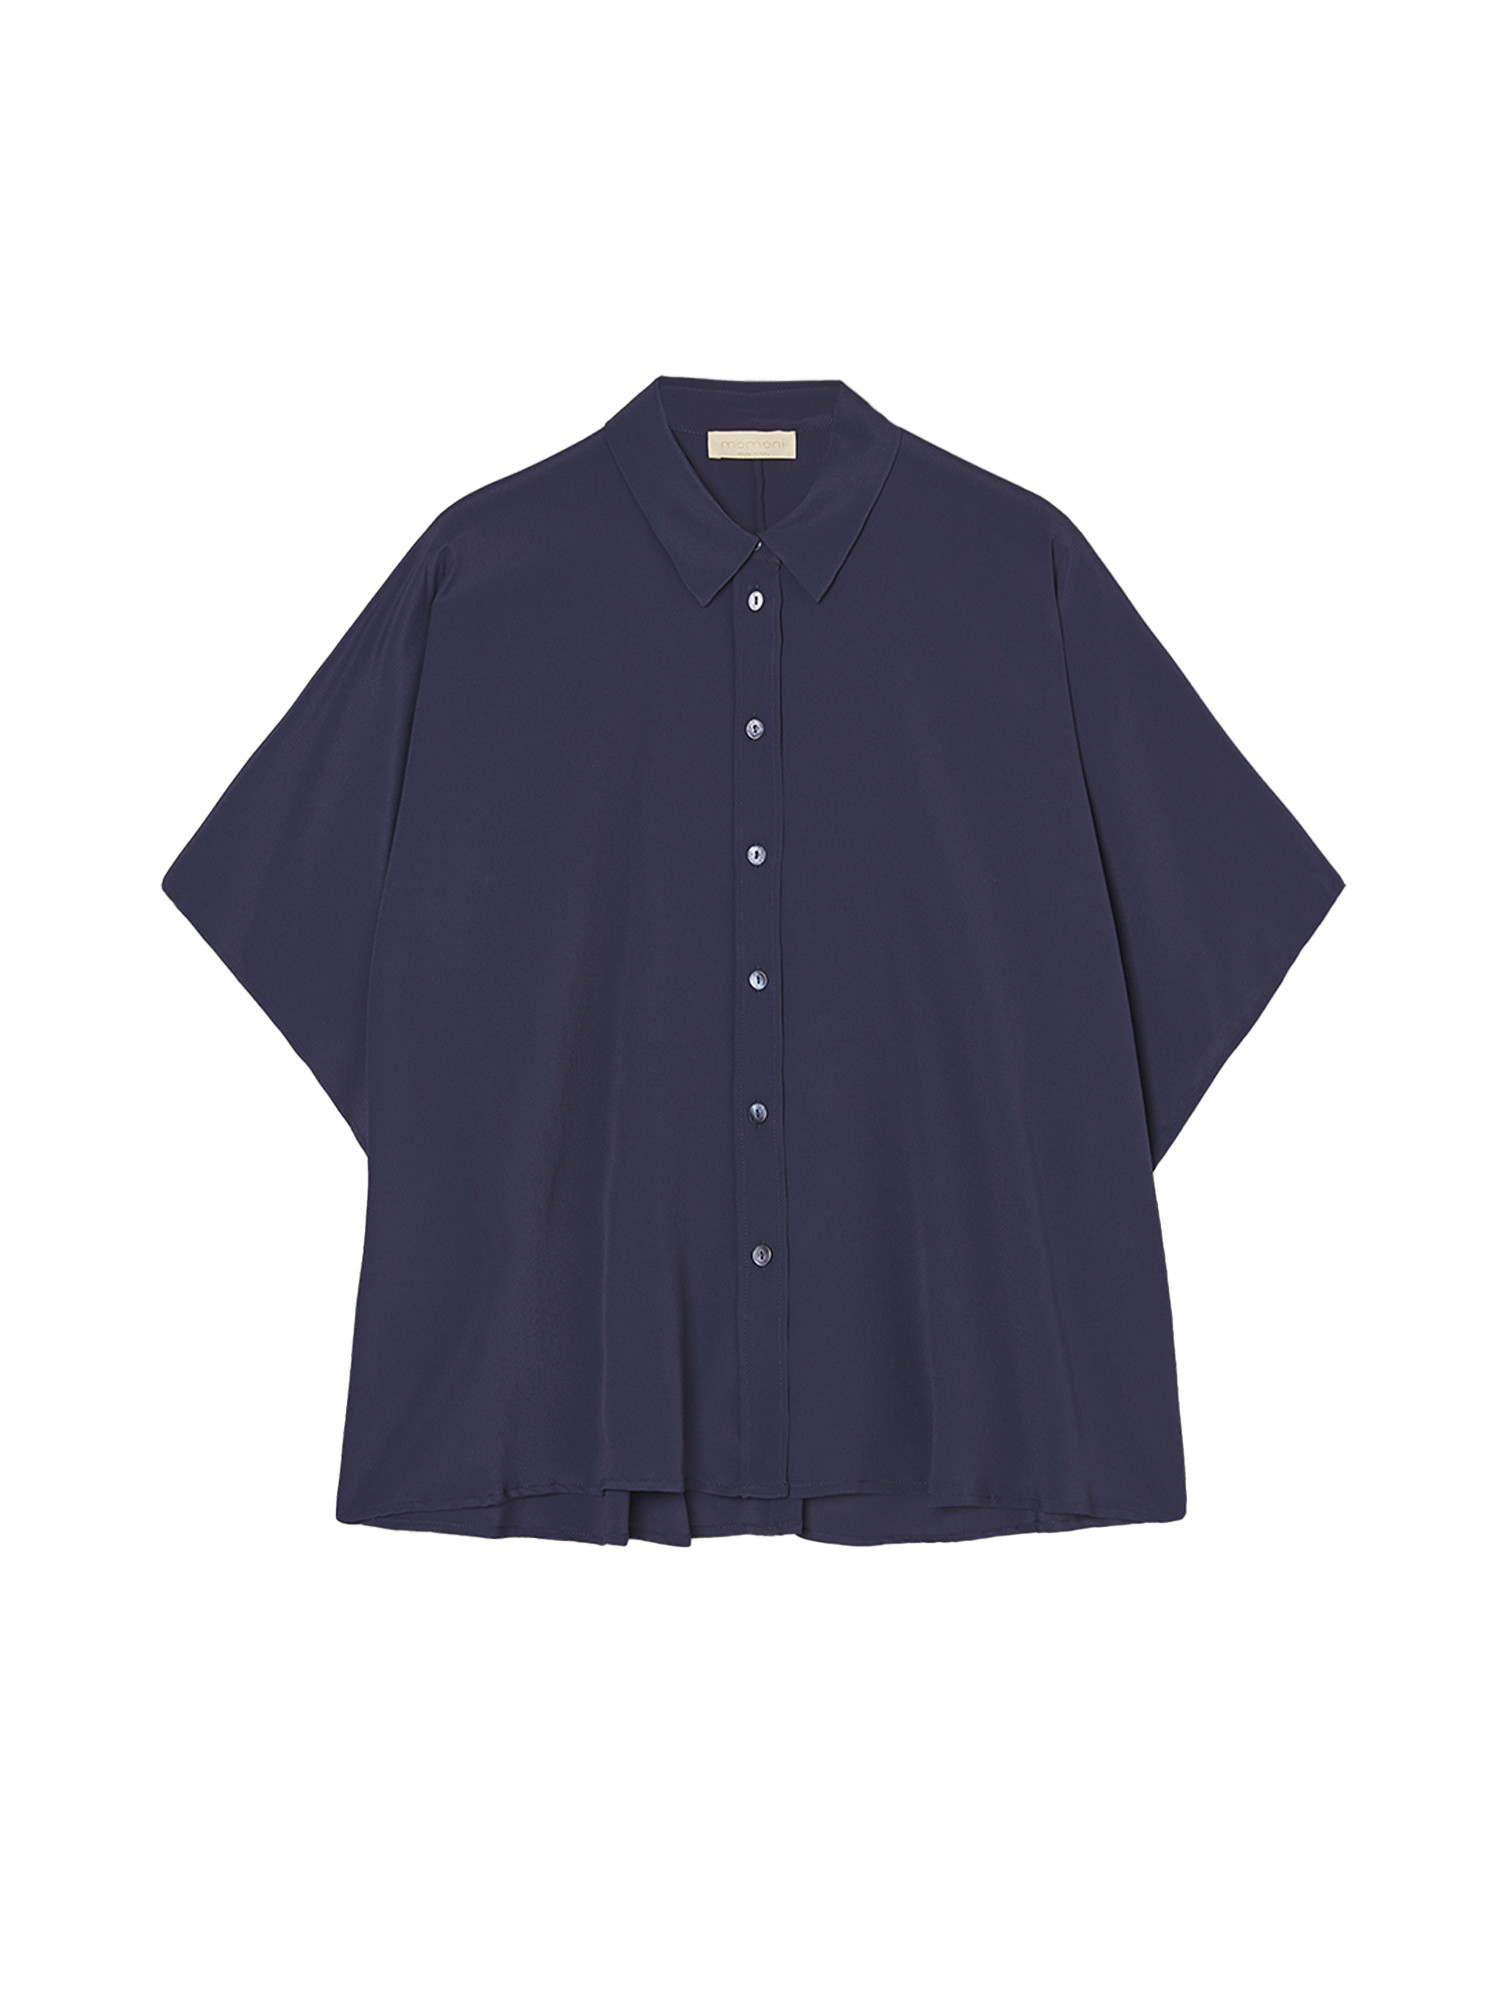 Momonì - Brooklyn shirt in cràªpe-silk blend, Dark Blue, large image number 0